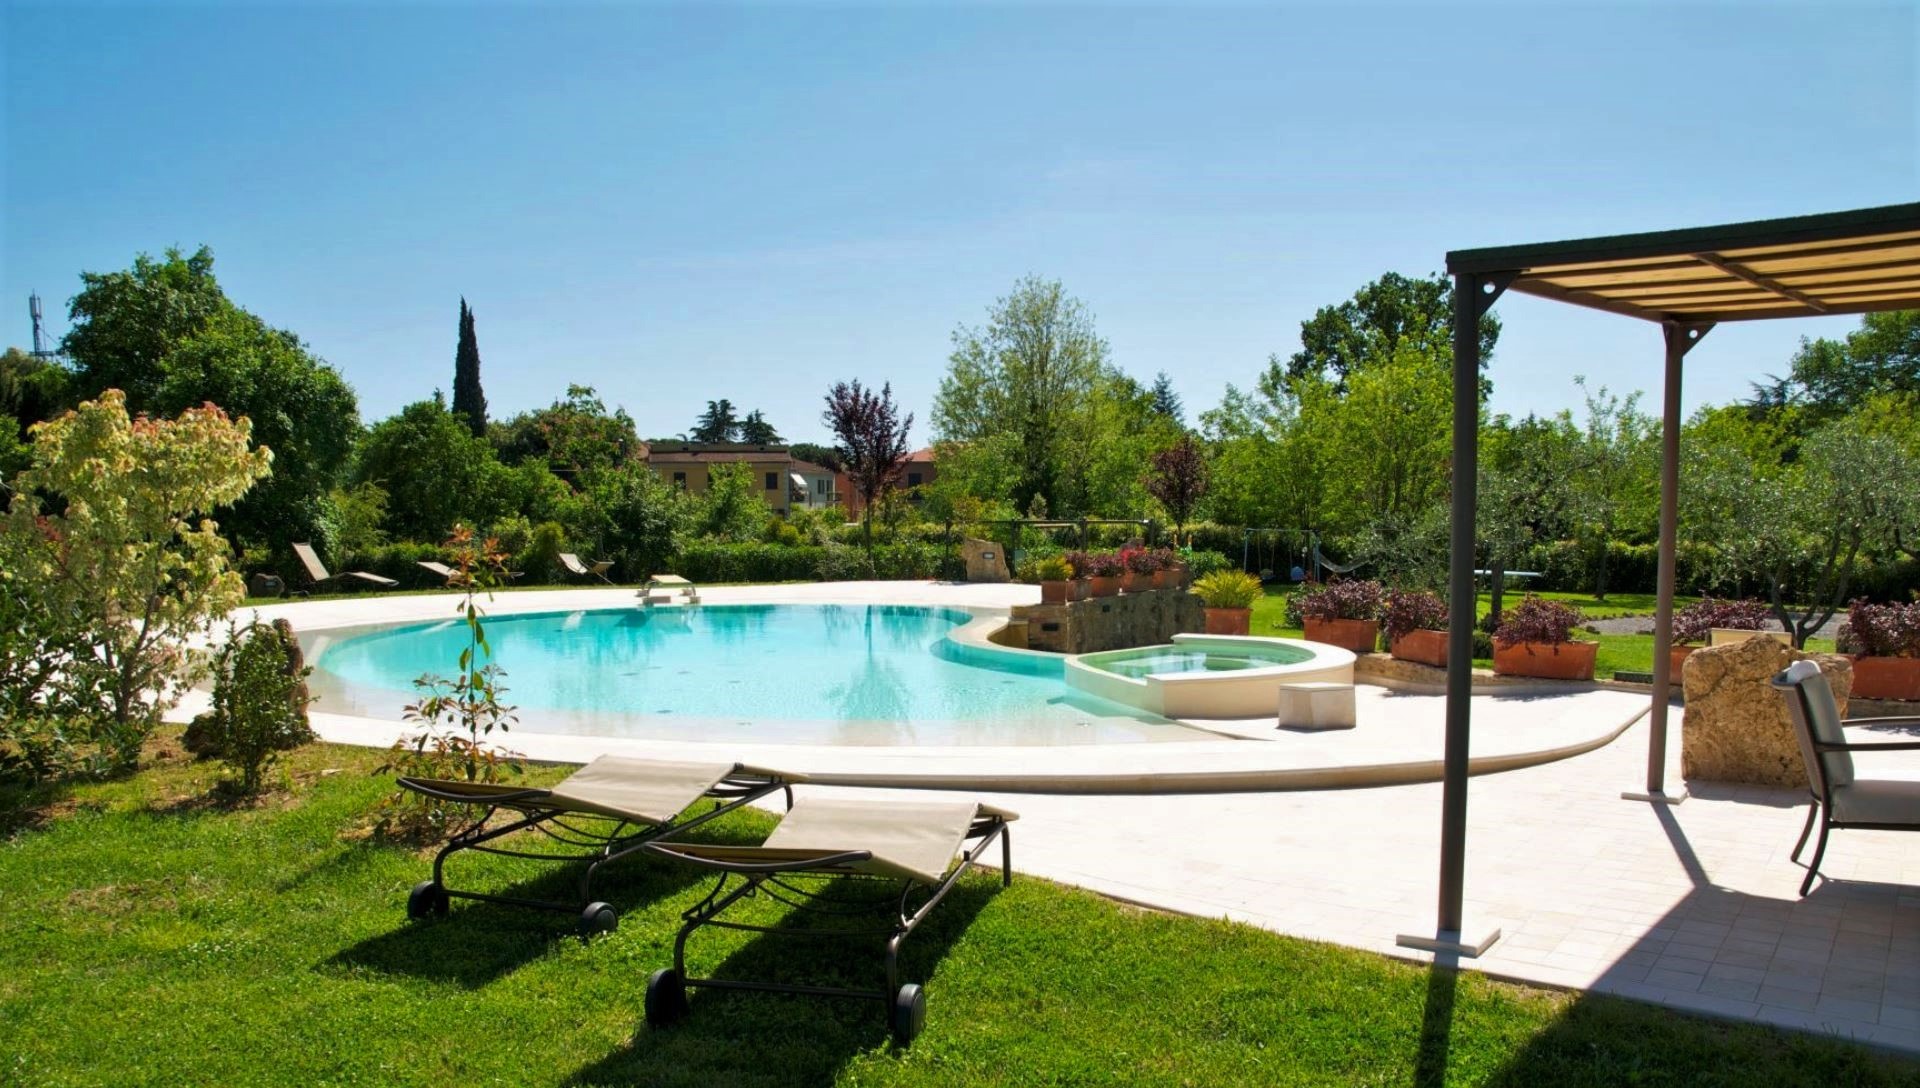 421_cf003cc_Agriturimso, vakantiehuis met privé zwembad, Toscane, Asciano, Val D'Orcia (19) 2